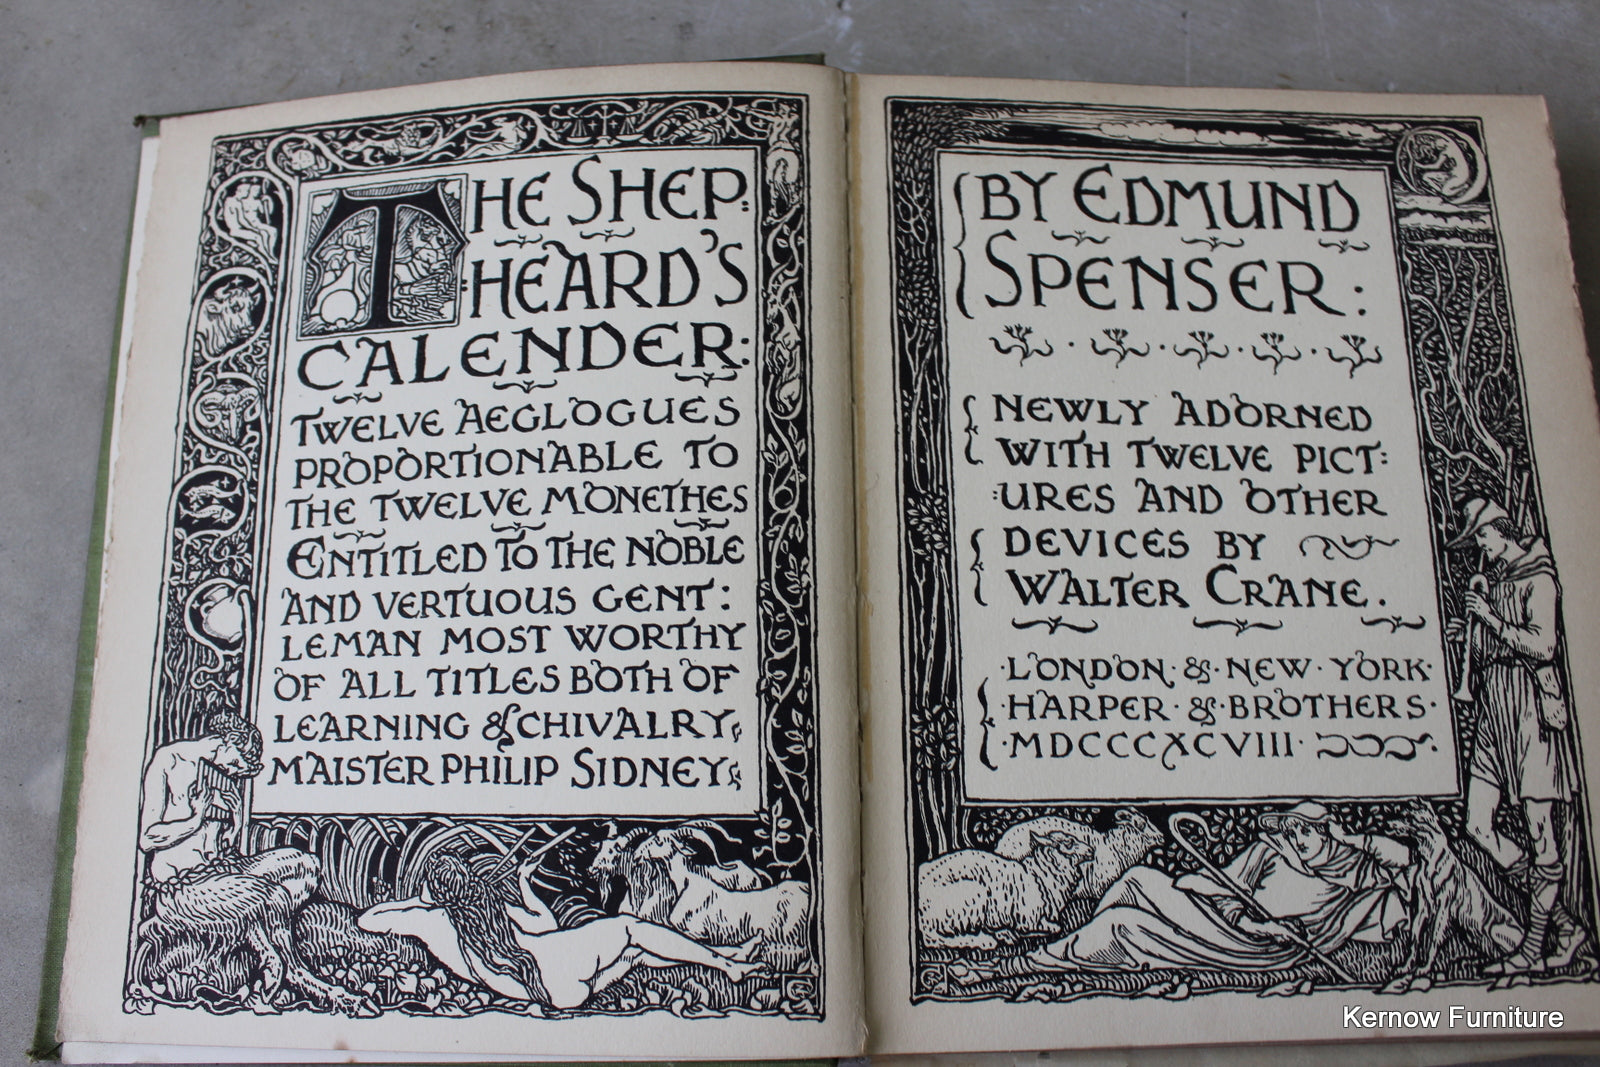 The Shepheards Calendar By Edmund Spencer - Kernow Furniture